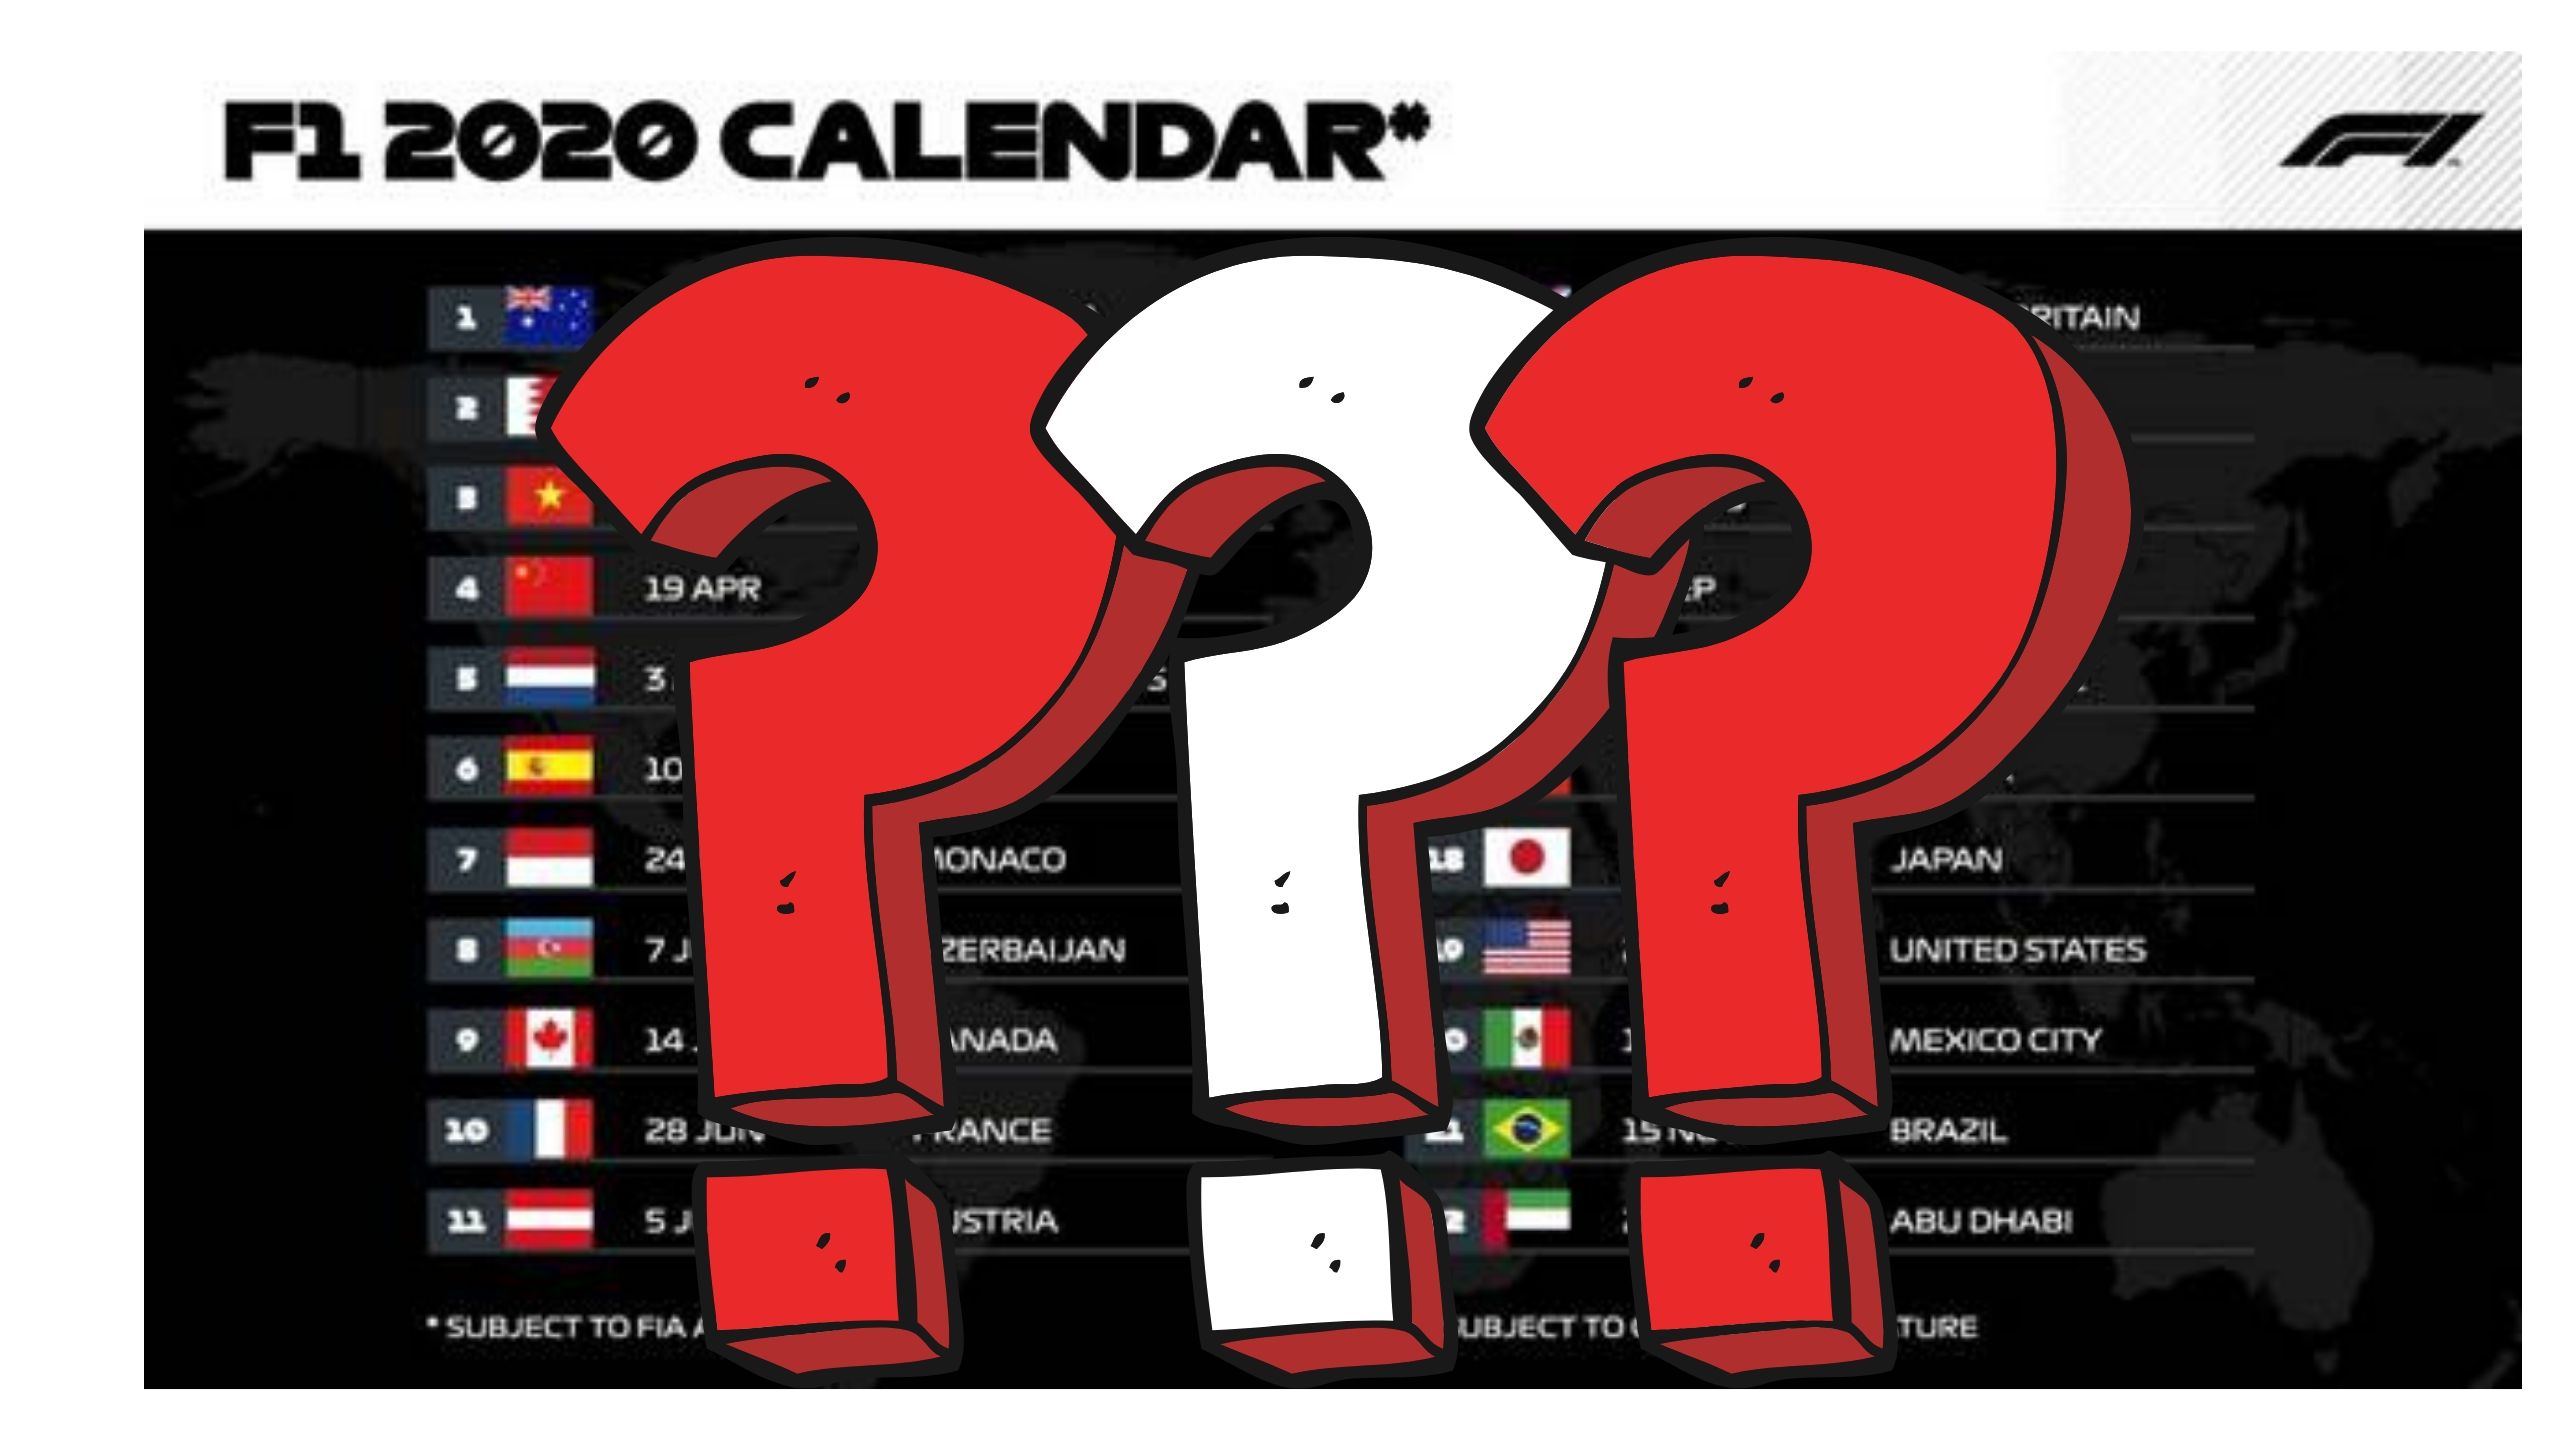 Calendario F1 2020